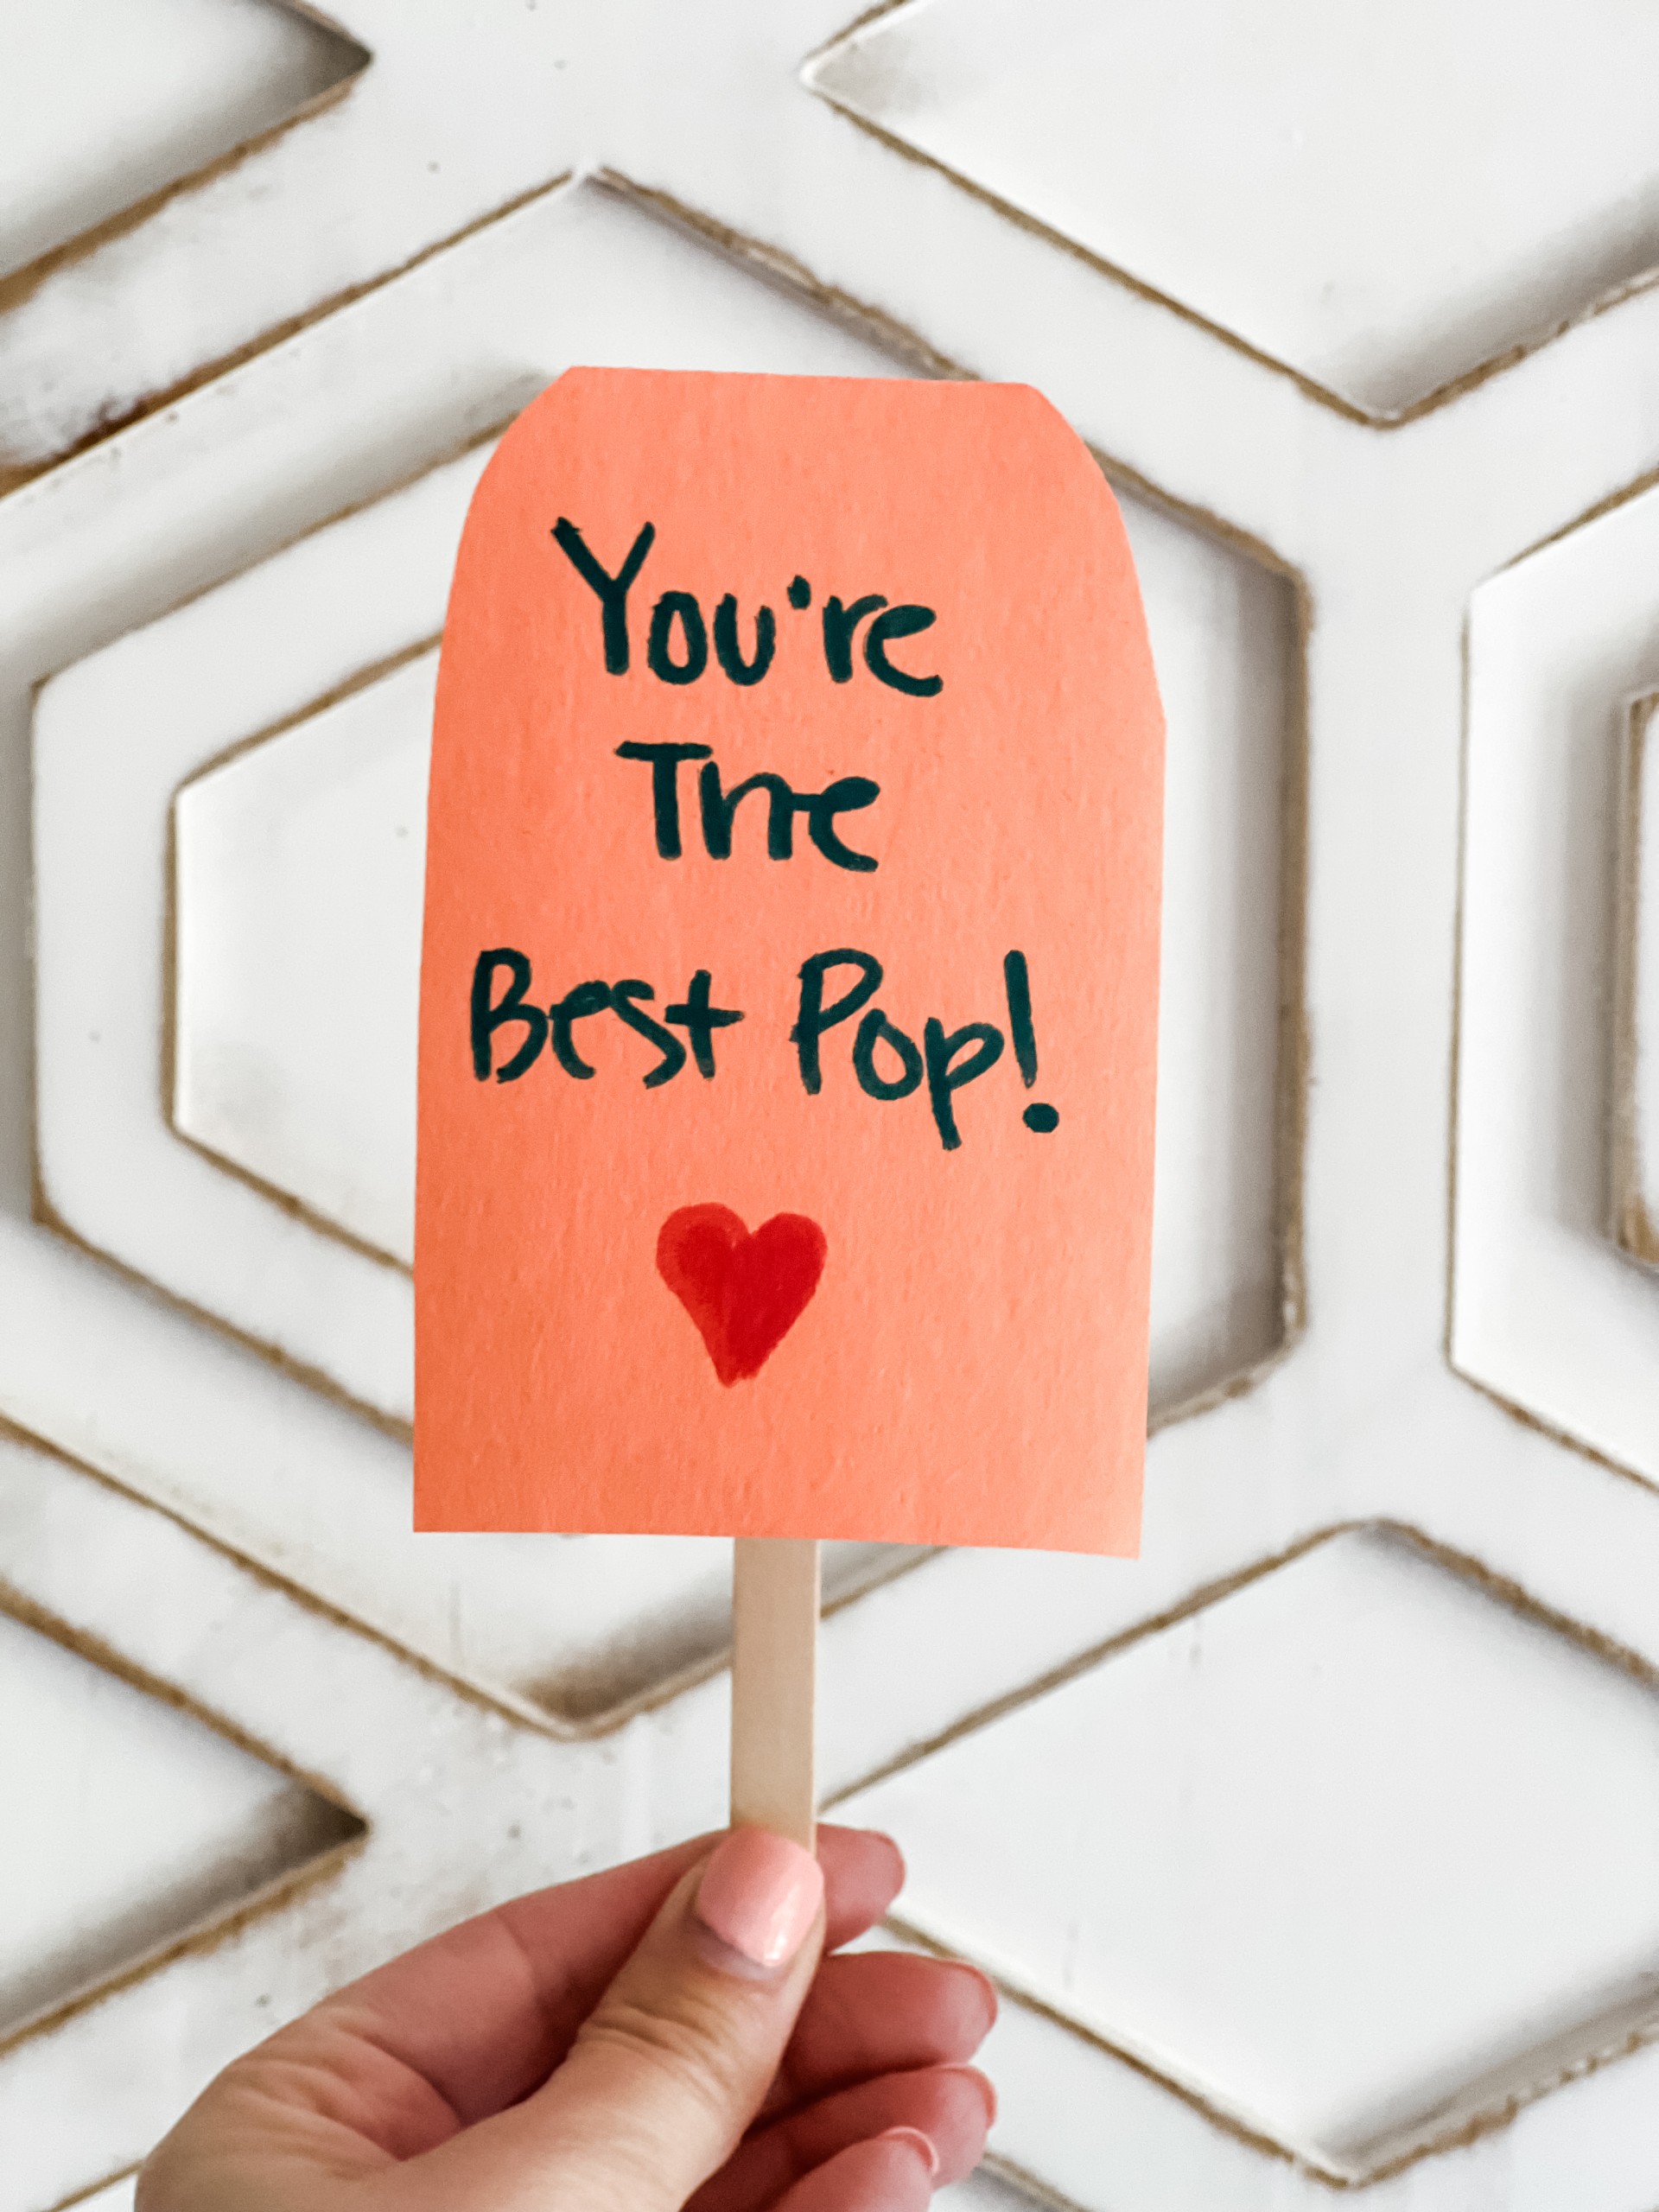 A card on a popsicle stick.